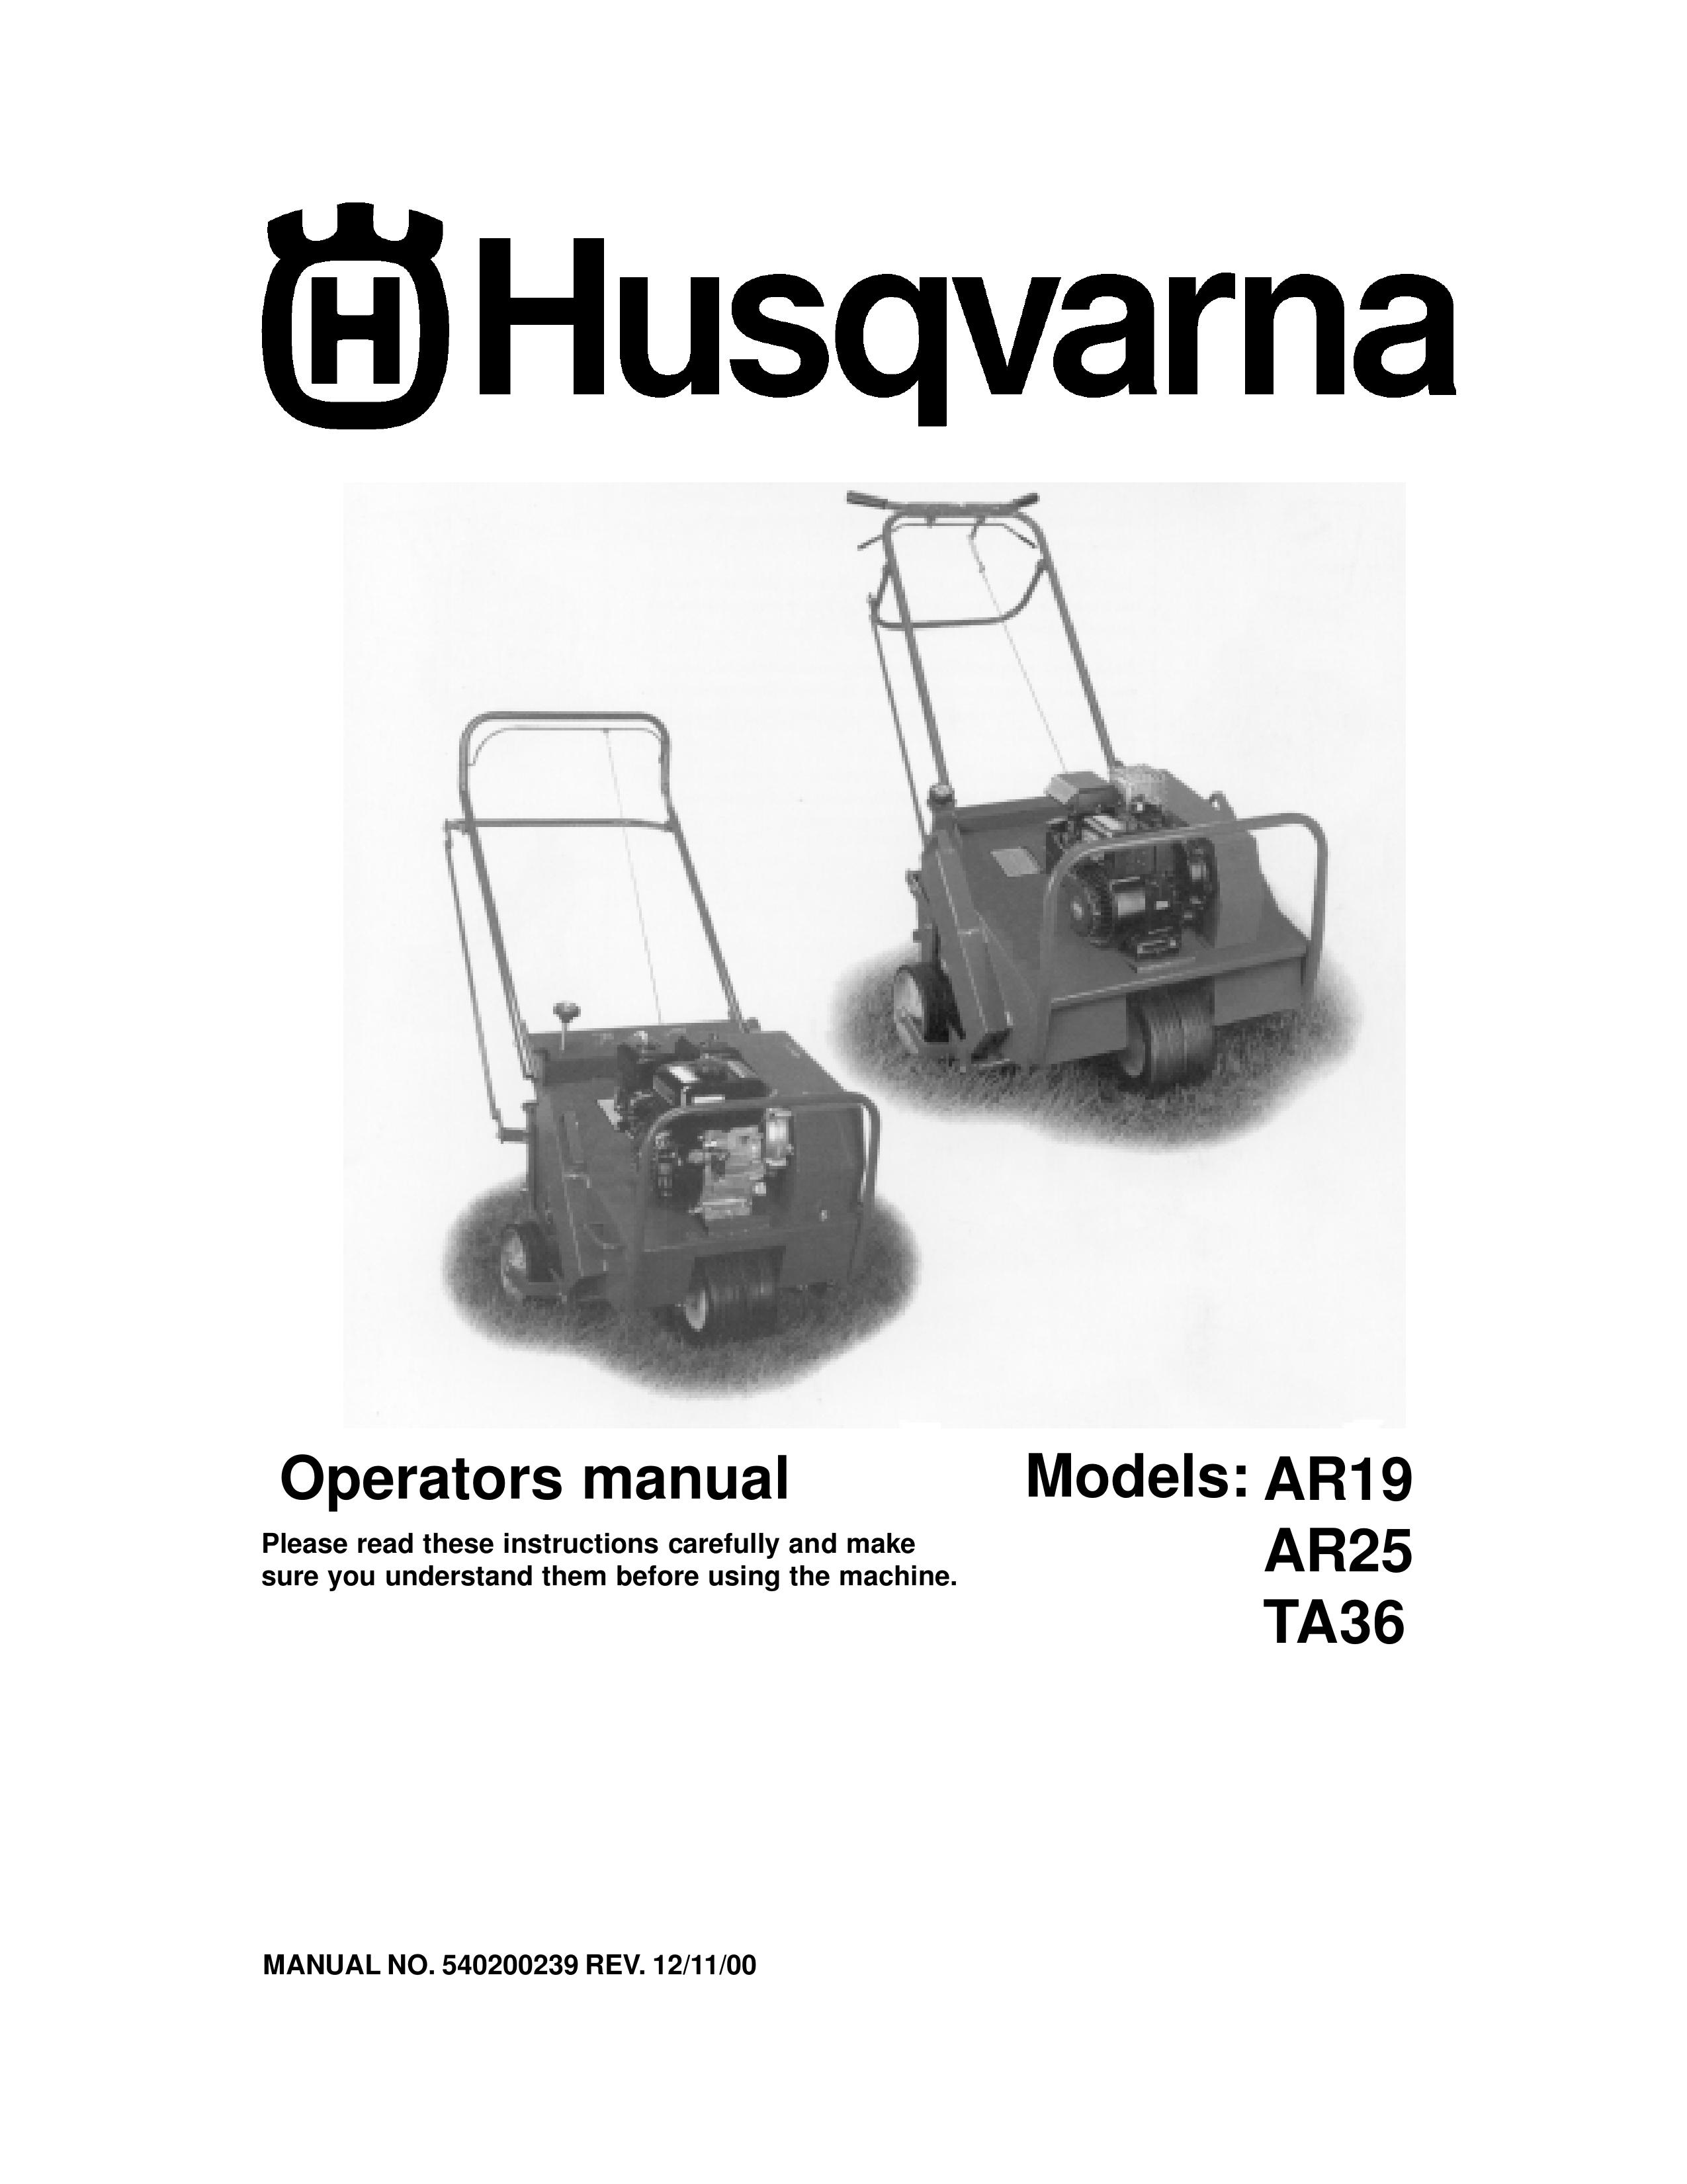 Husqvarna AR19 Lawn Aerator User Manual